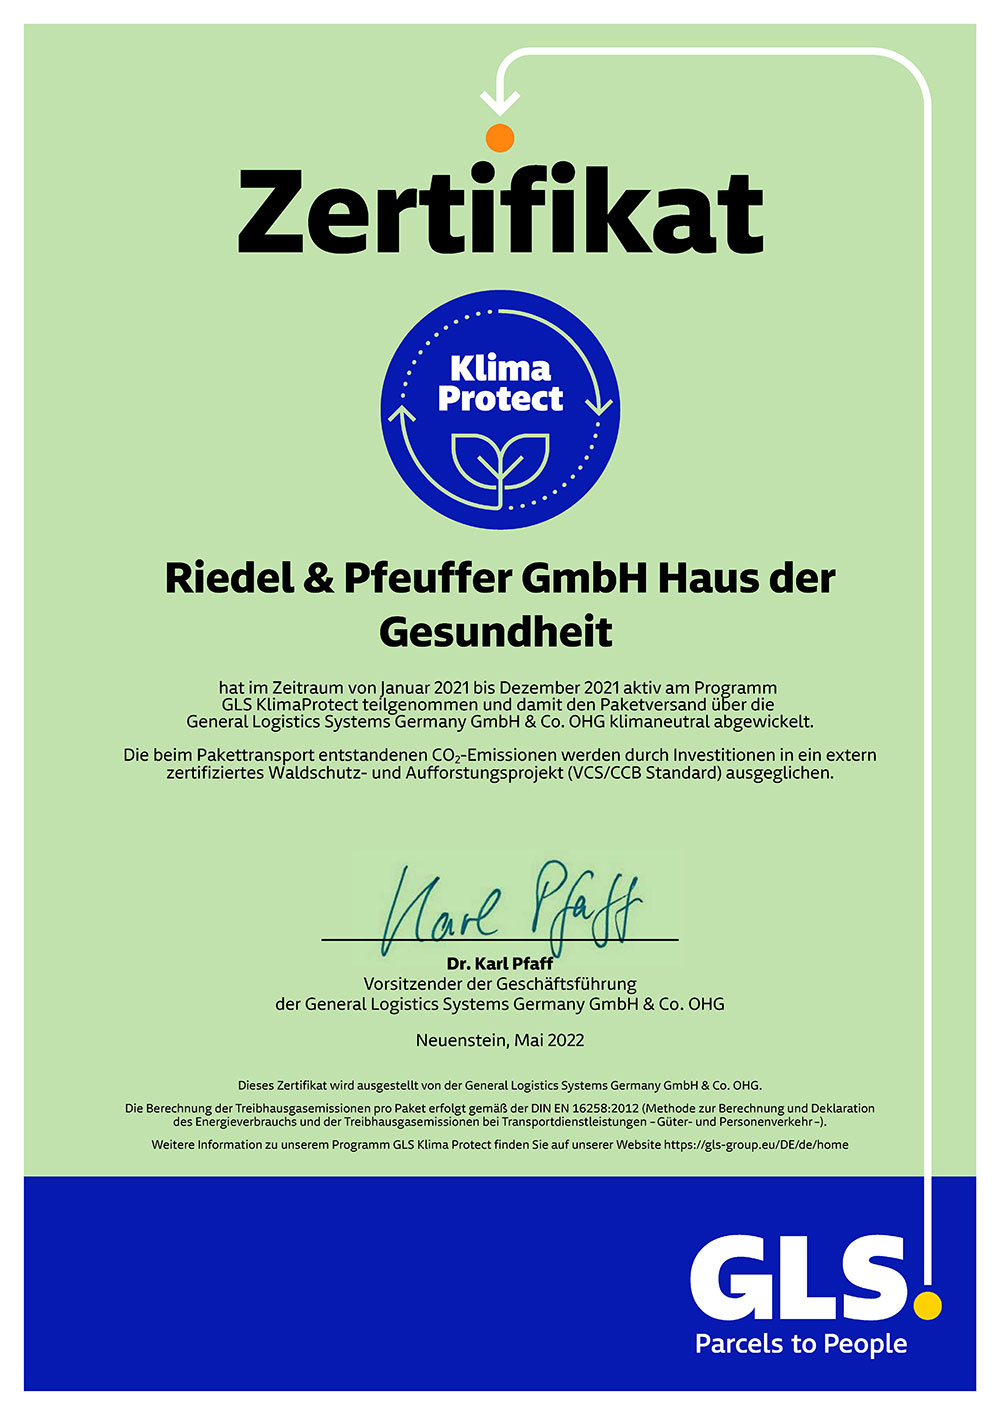 Zertifikat GLS Klima Protect